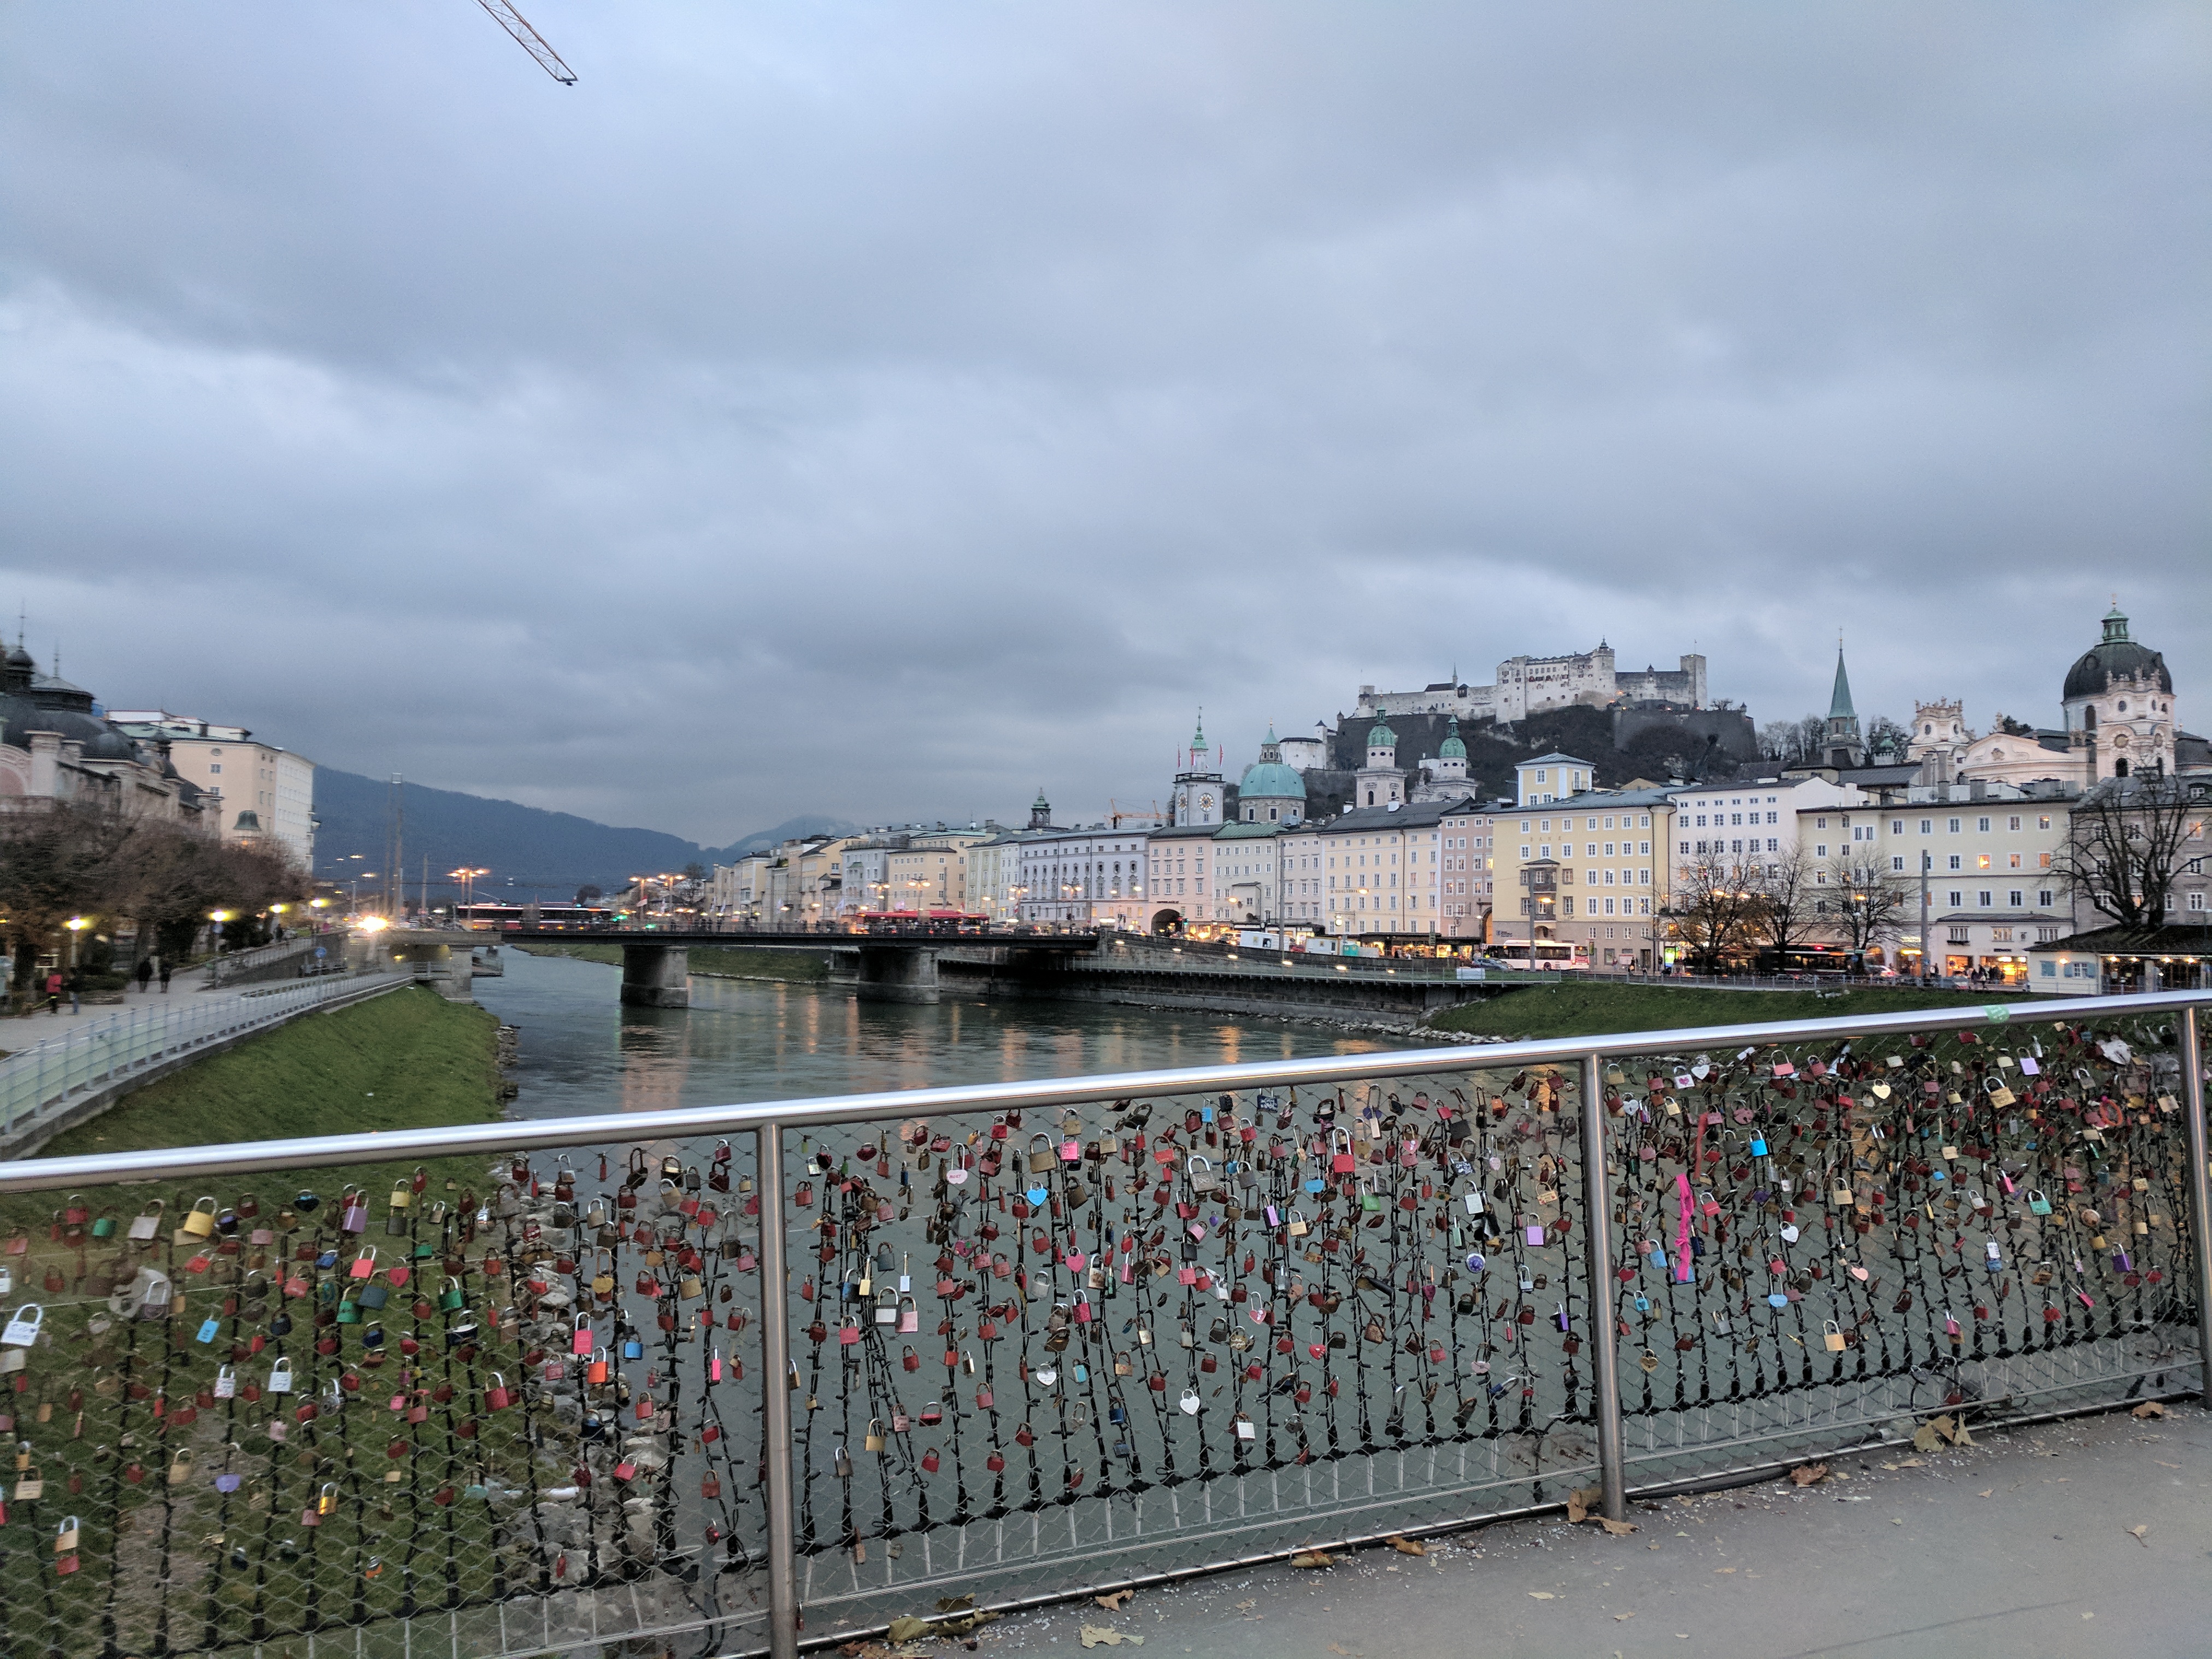 IMG 20171118 162805 - Quick Trip to Salzburg, Austria